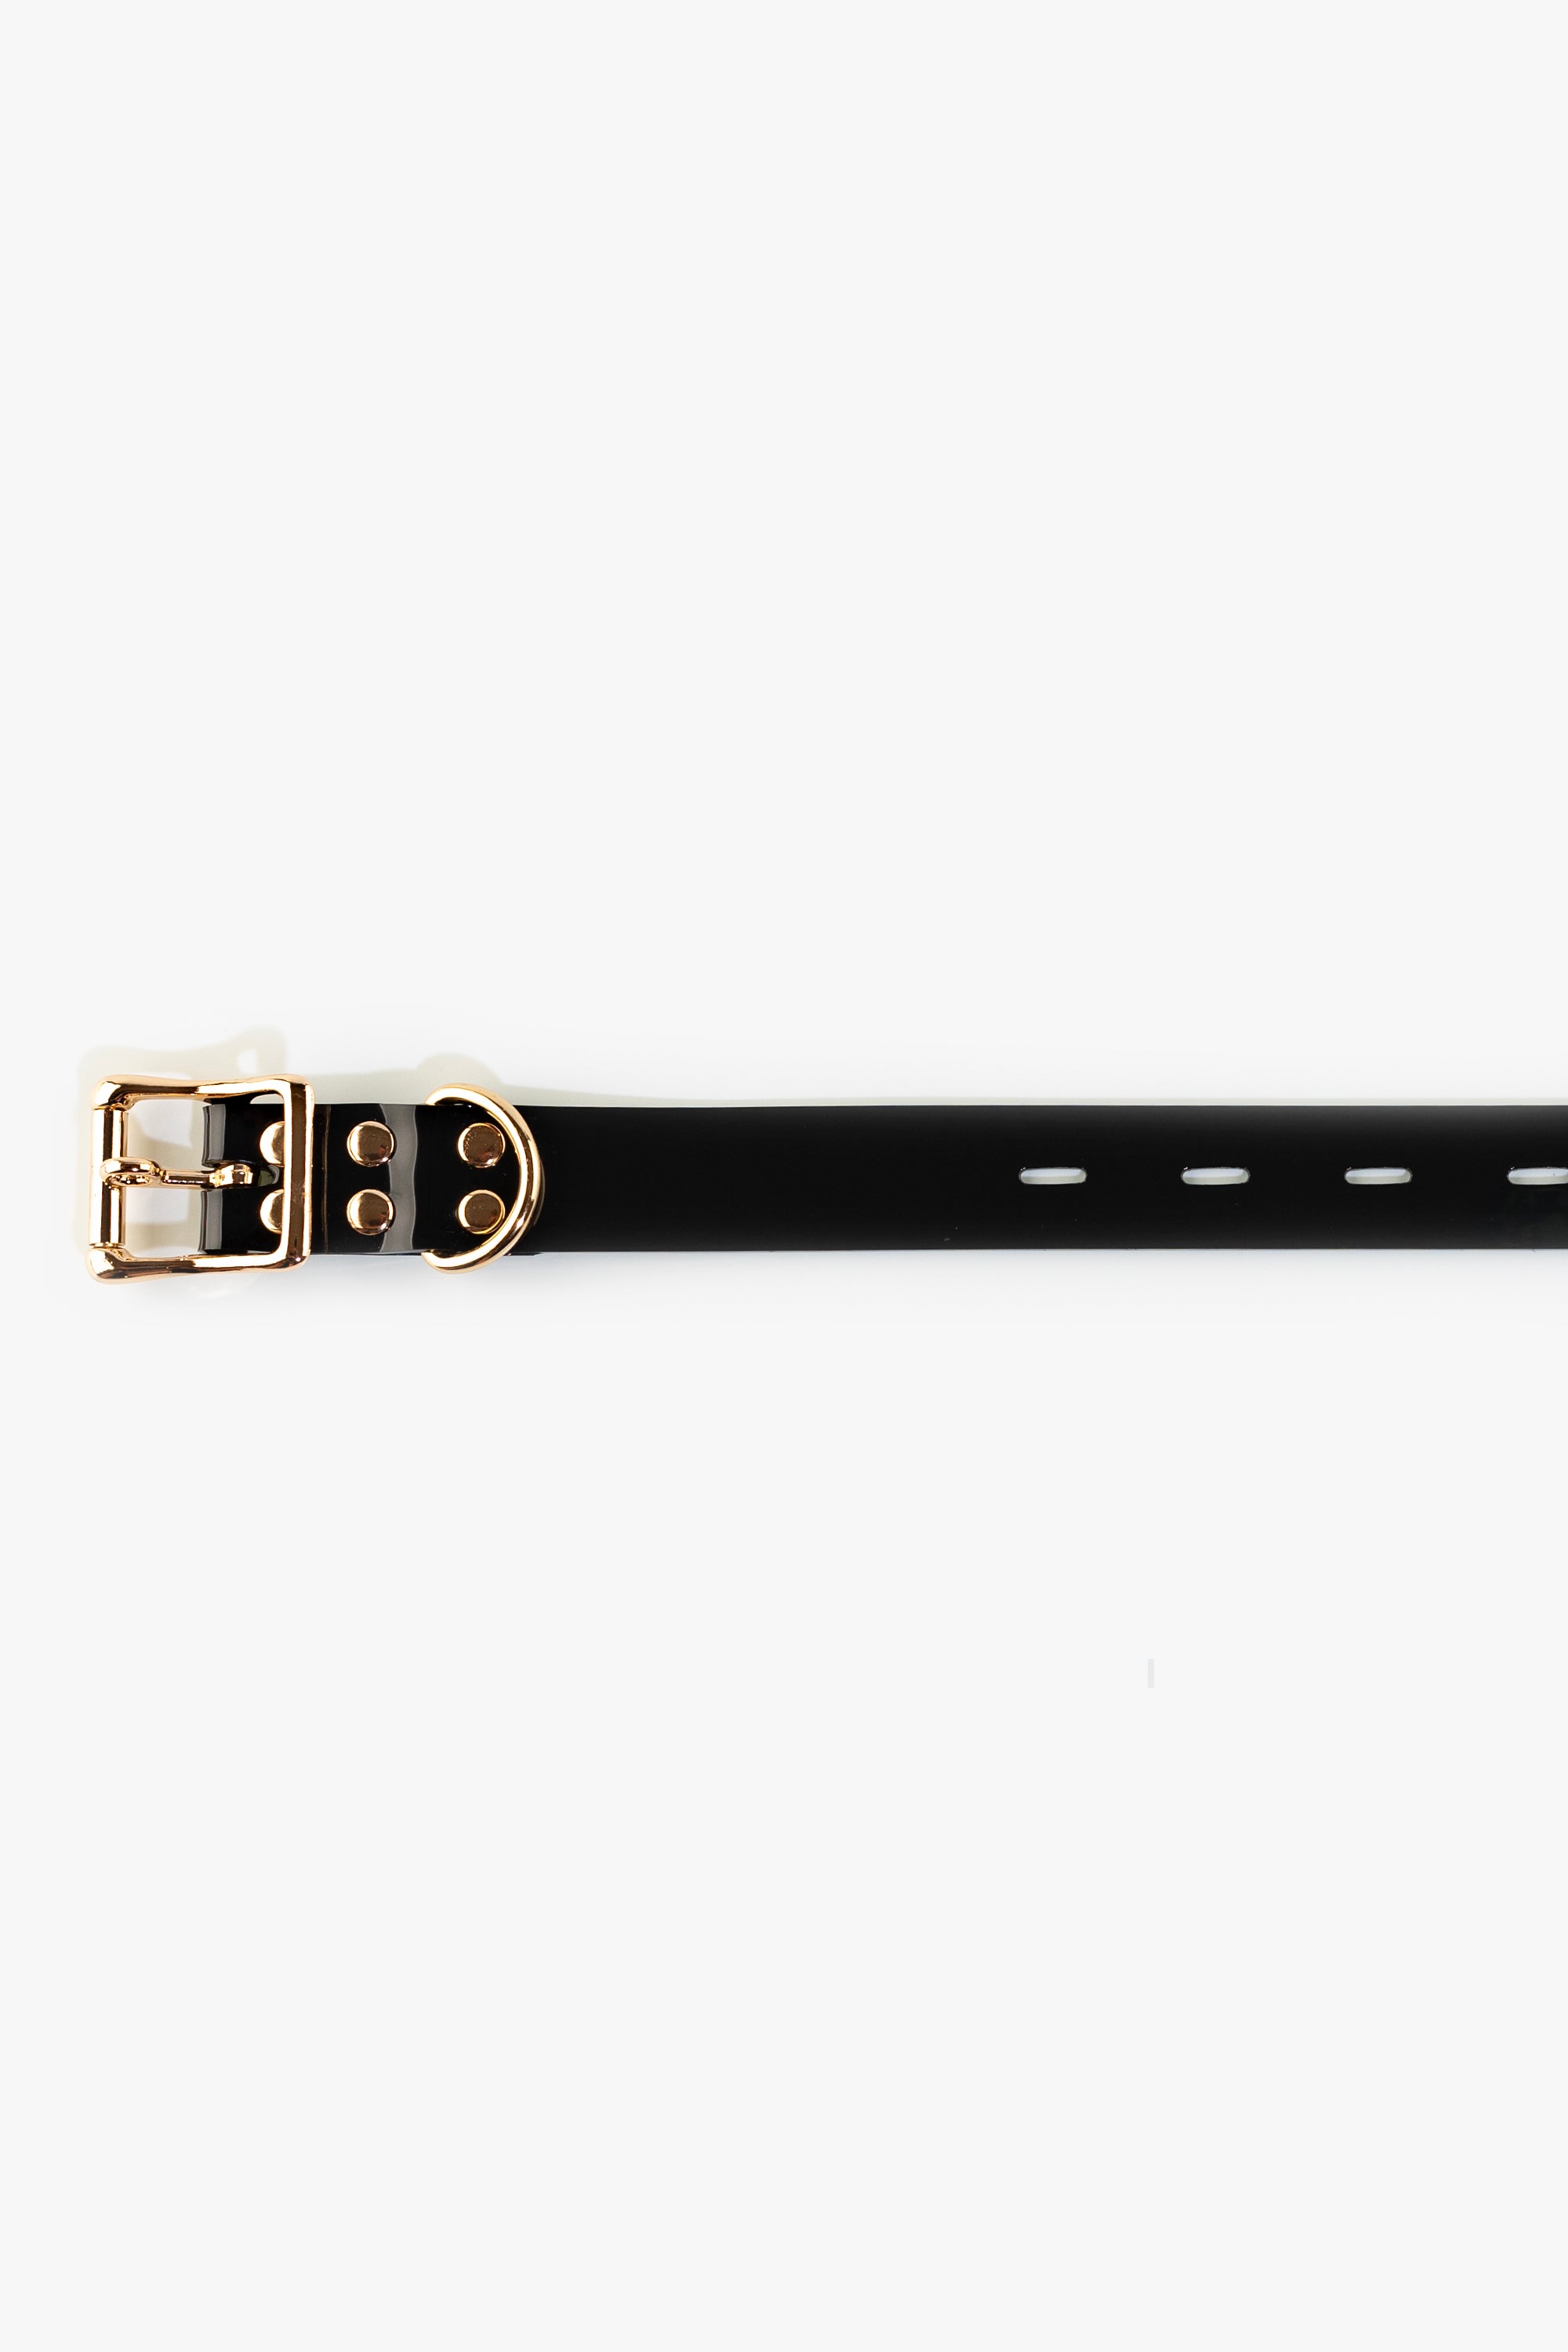 Bondage lockable straps set 25 mm, black/gold